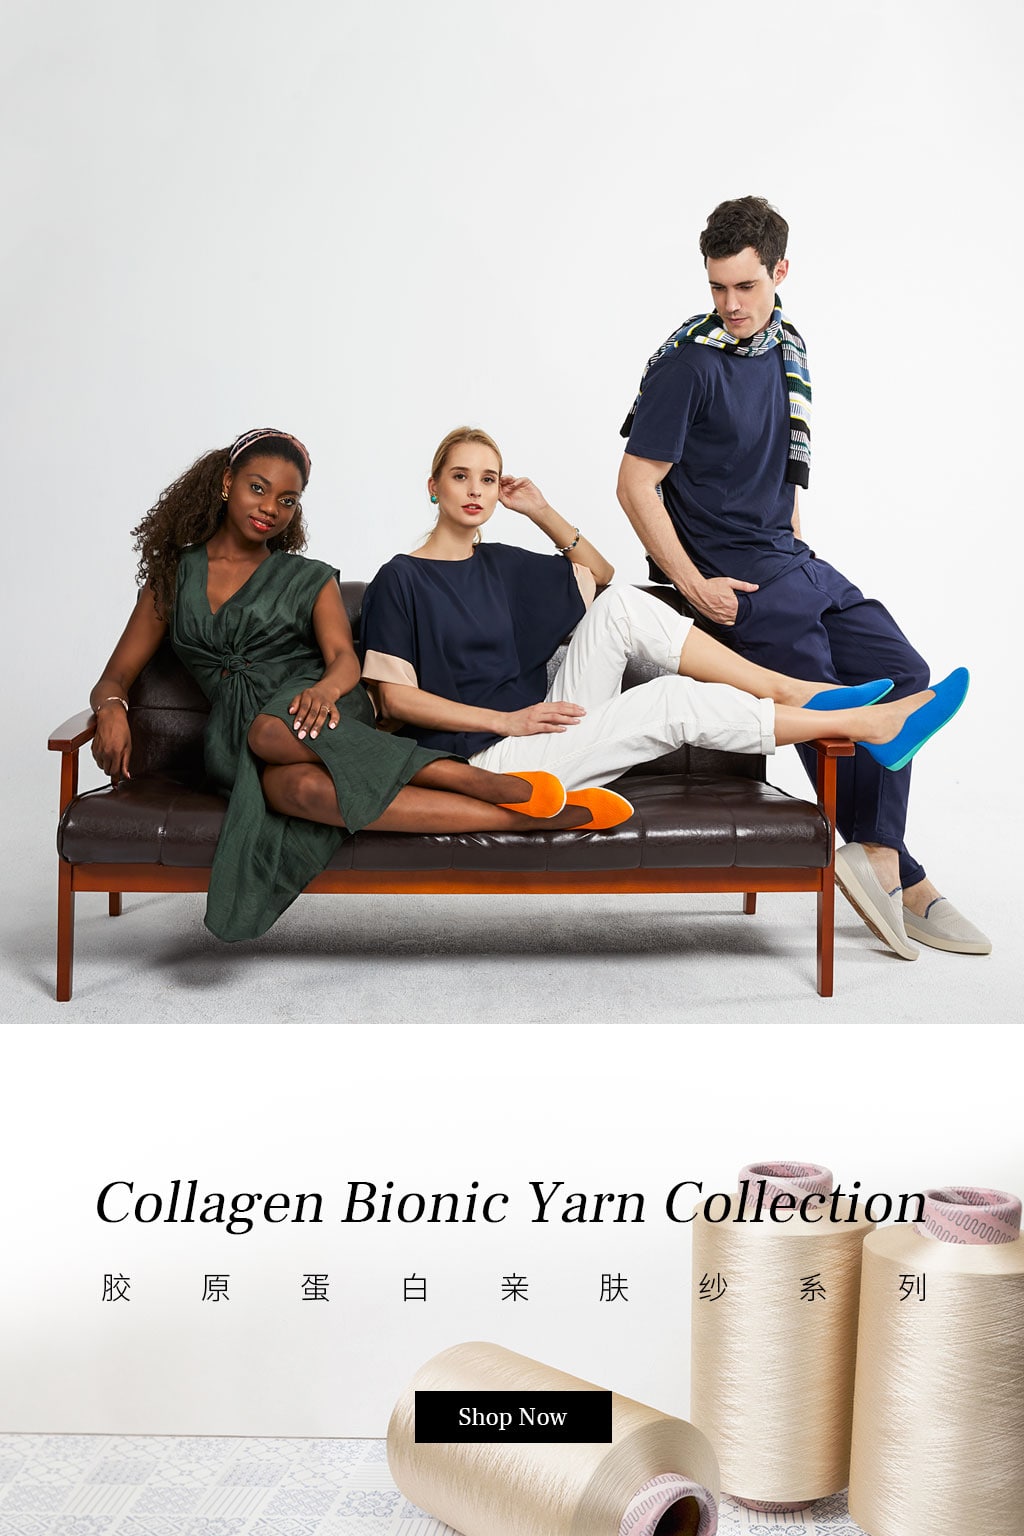 Cn-Bionic Yarn Collection A